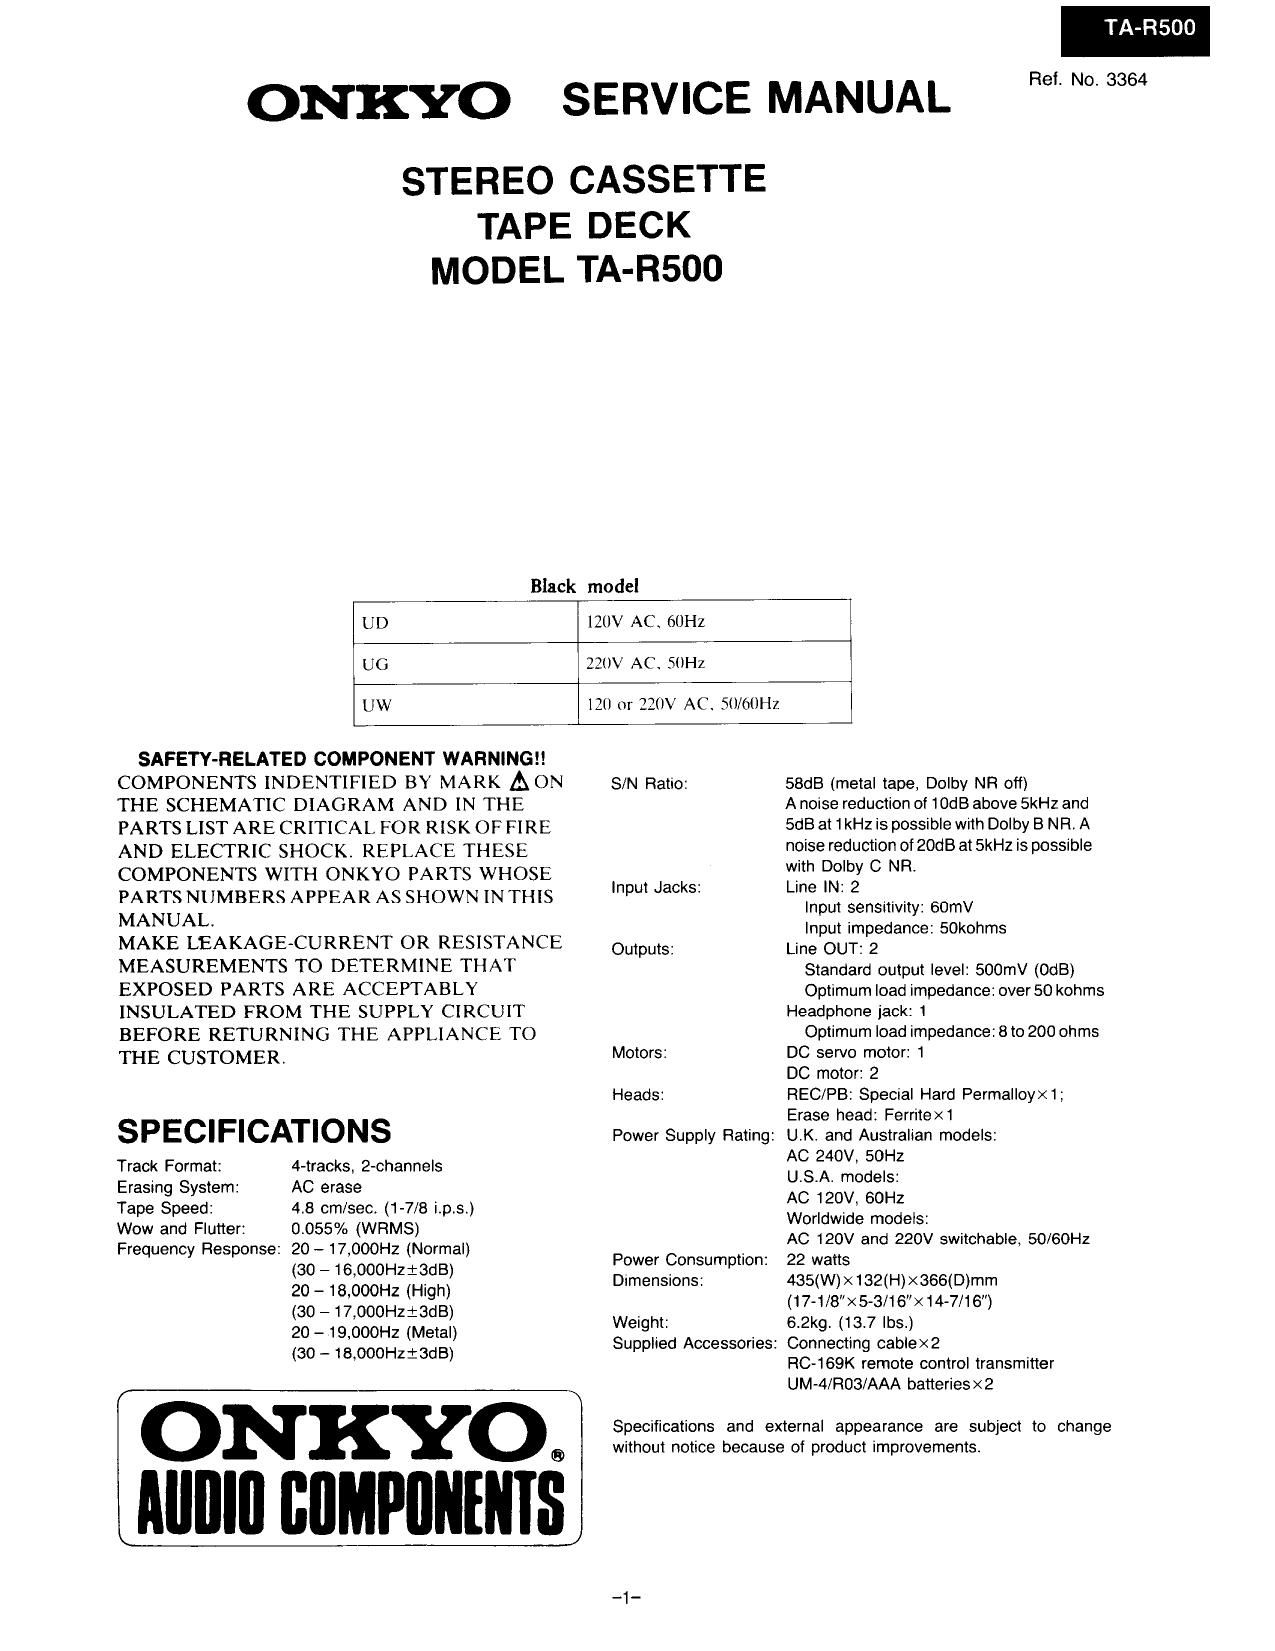 Onkyo TAR 500 Service Manual